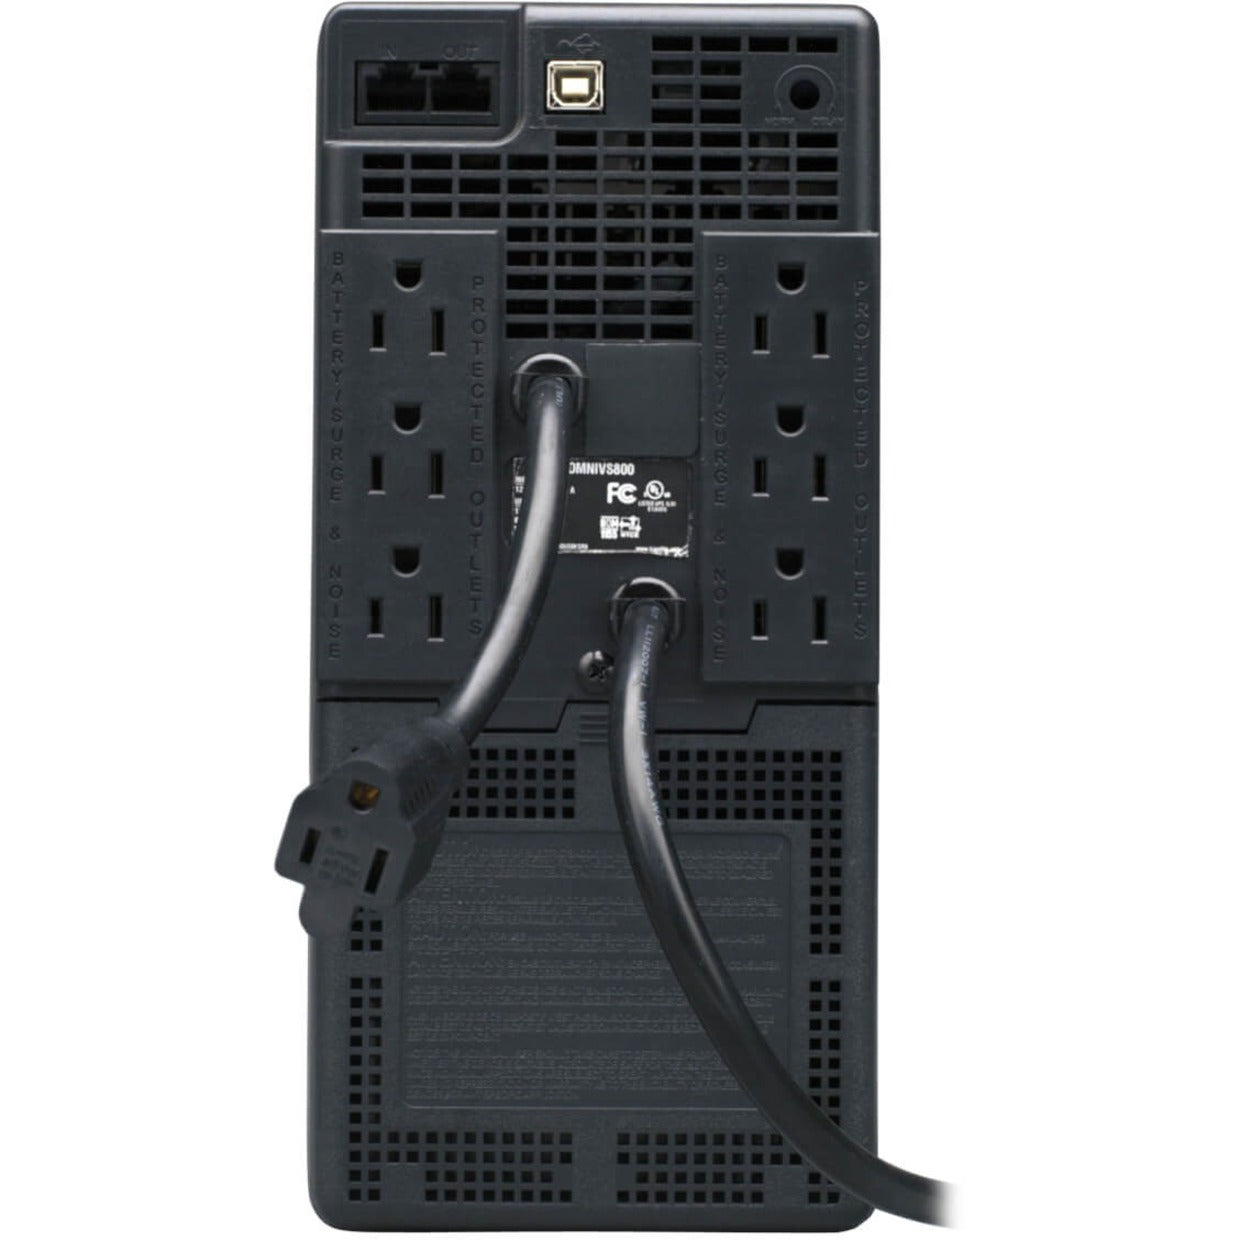 Tripp Lite OMNIVS800 800VA UPS Power Protection Series 7 Outlets 1 USB